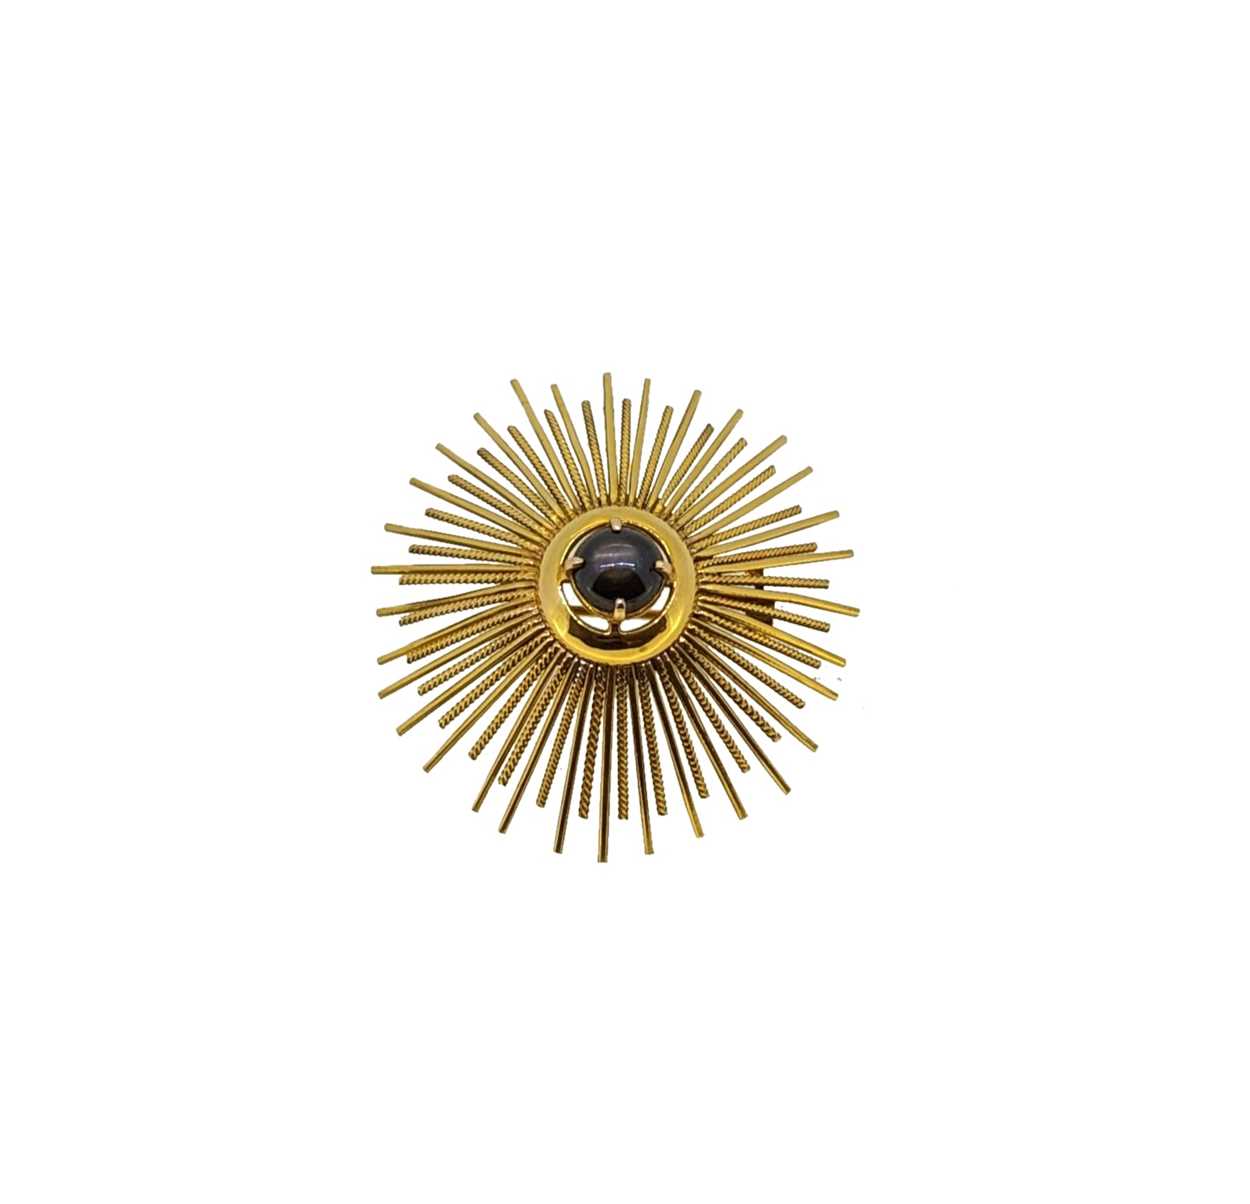 A star sapphire pendant/brooch,